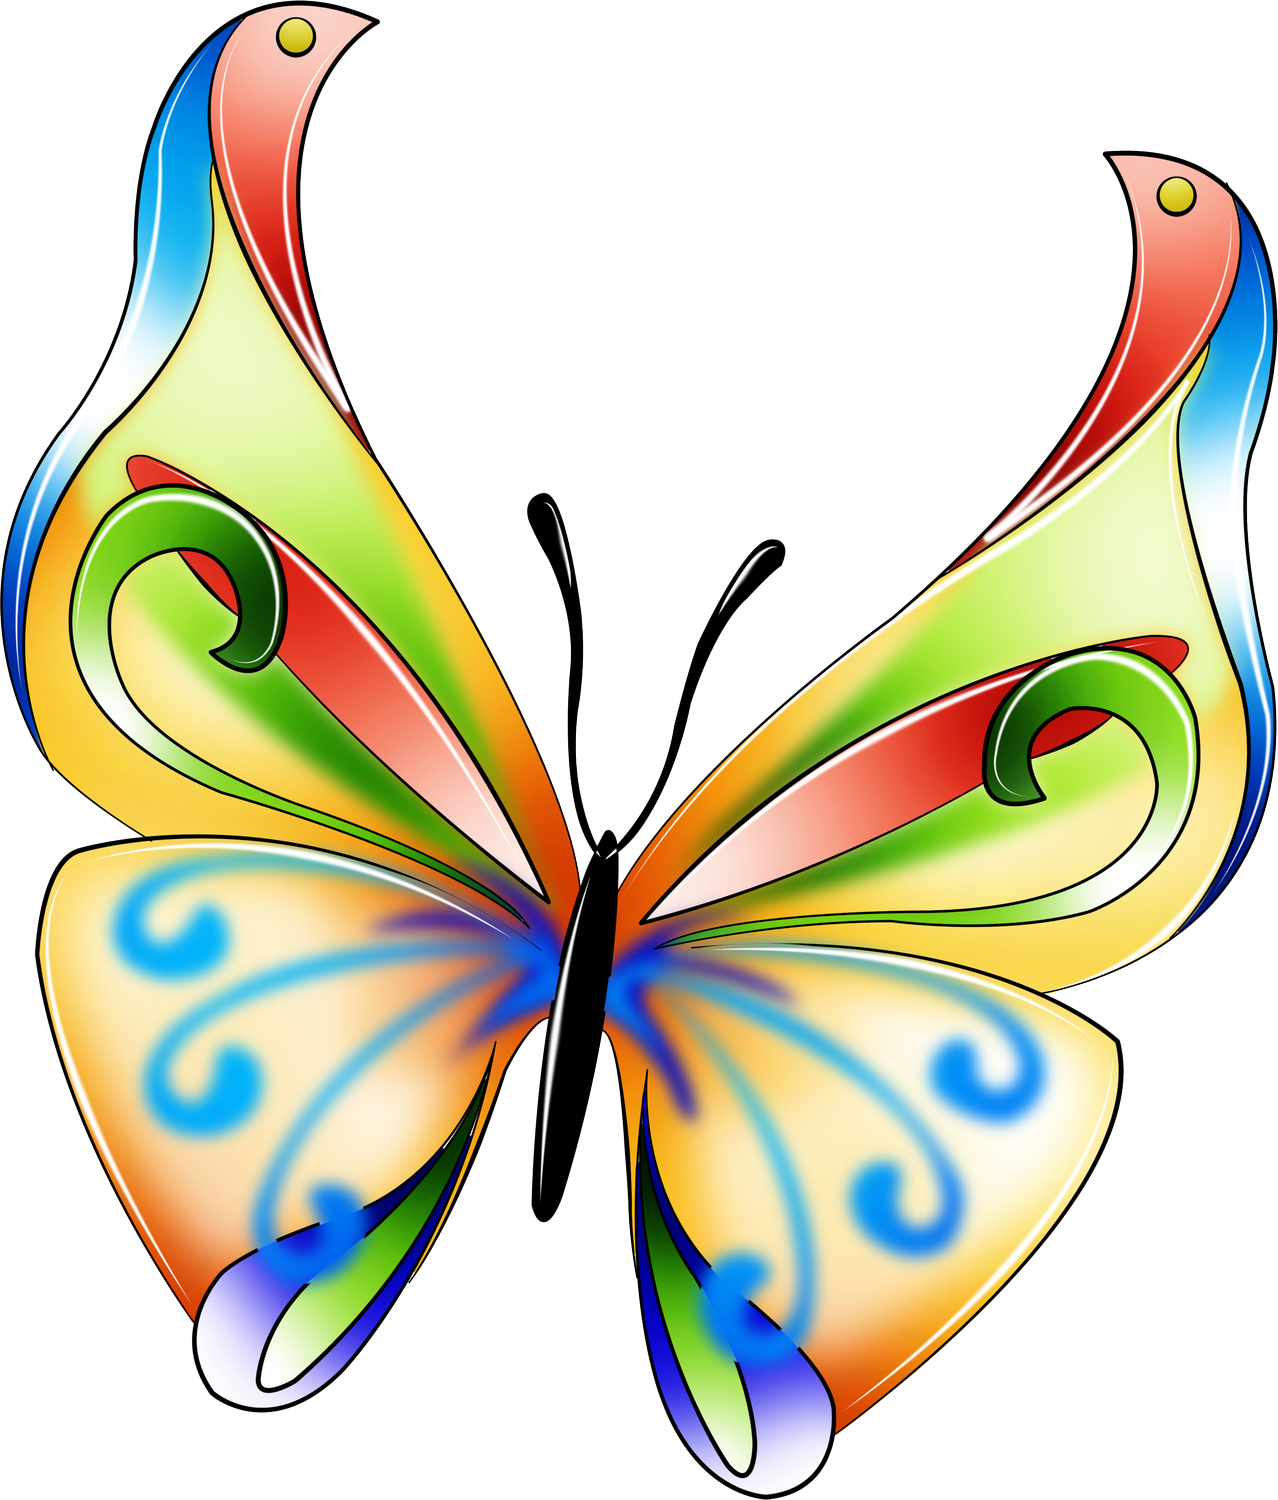 Бабочка в садик. Бабочки цветные. Бабочка картинка для детей. Цветные бабочки для детей. Бабочки красивые цветные.